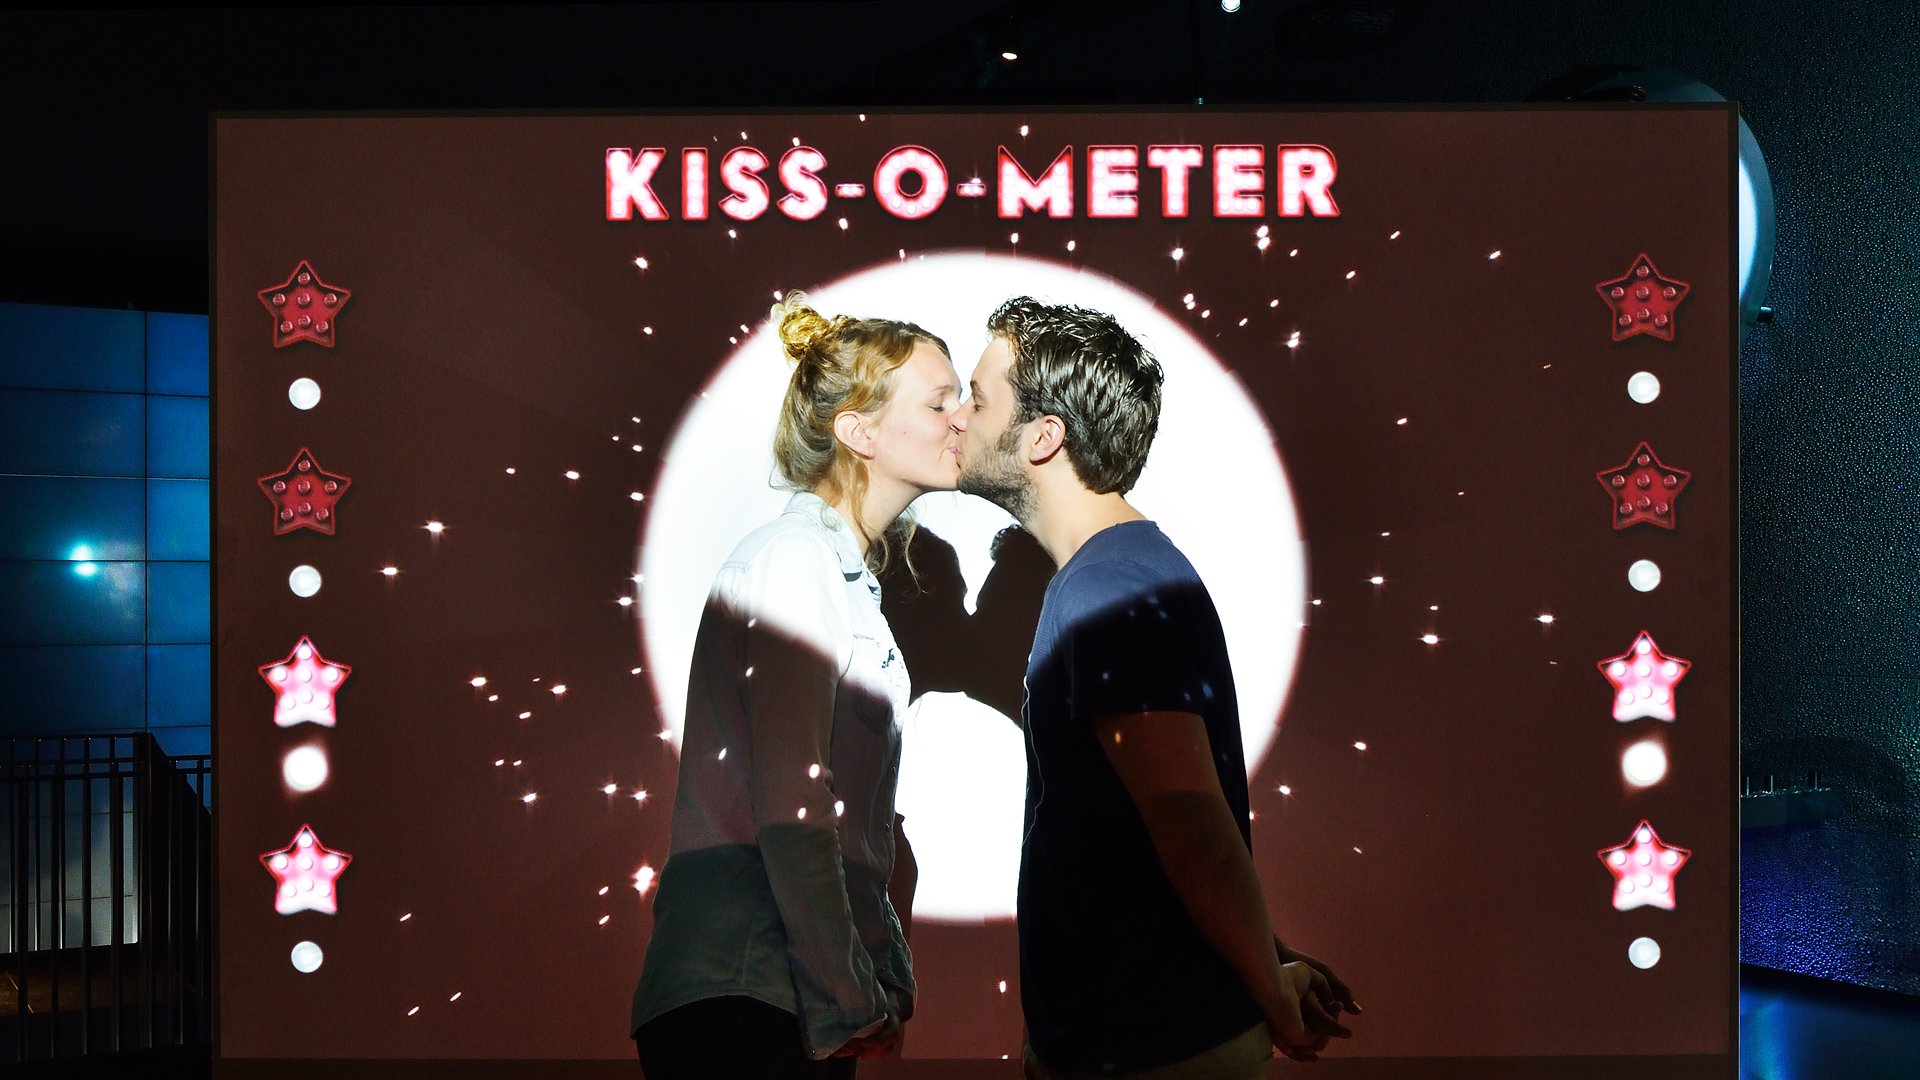 Kiss-o-meter-english_Micropia_Maarten_v.d_Wal_1920x1080.jpg